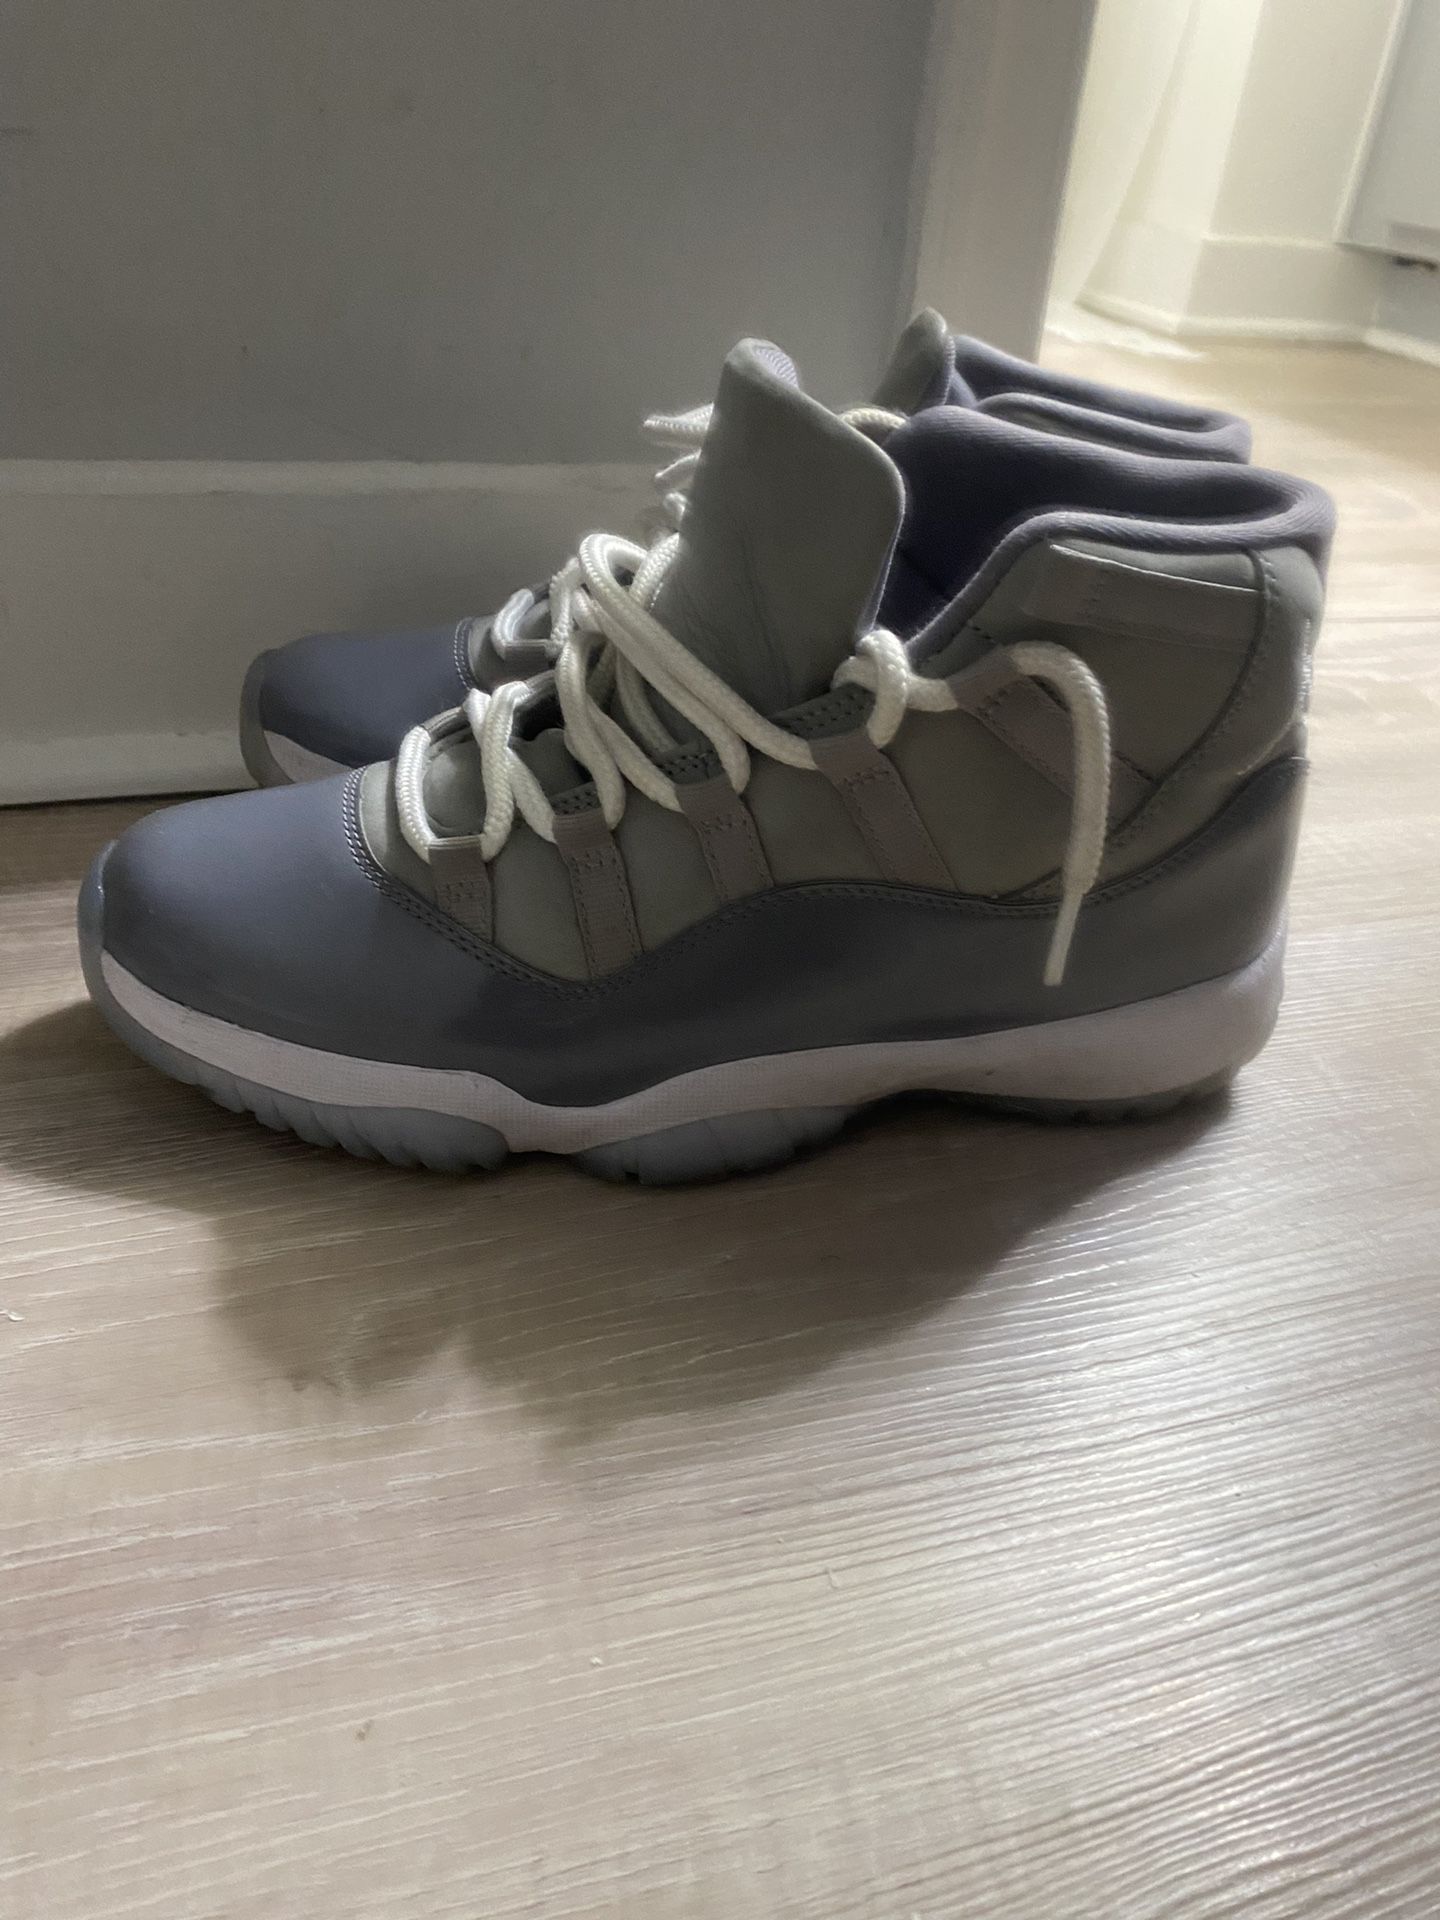 Cool Gray Jordan 11 Size 9.5